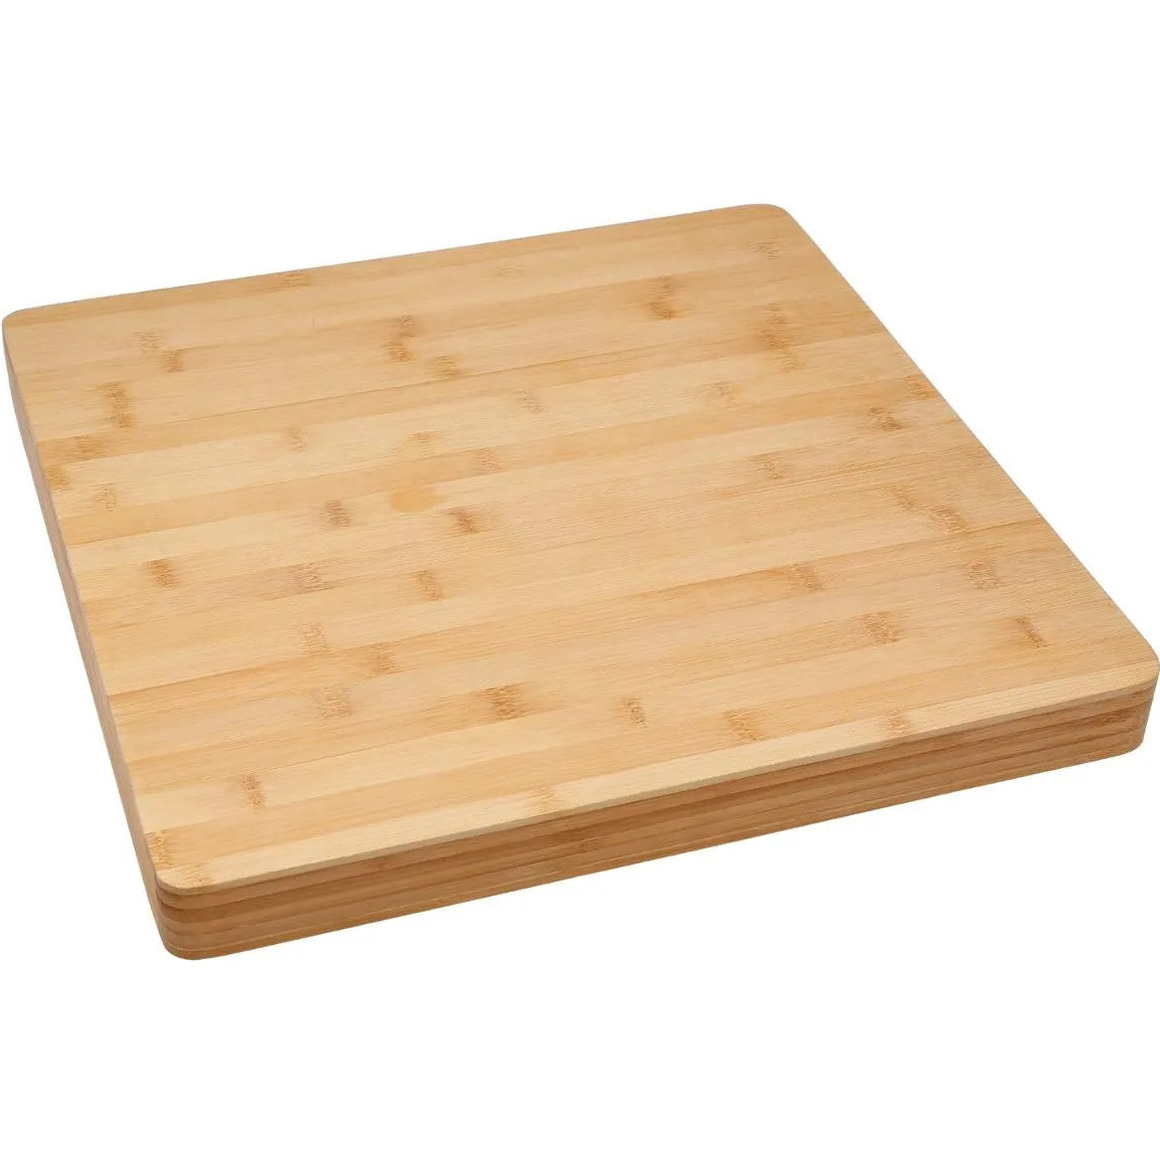 5five Grote snijplank/serveerplank vierkant x 3,5 cm van bamboe hout -